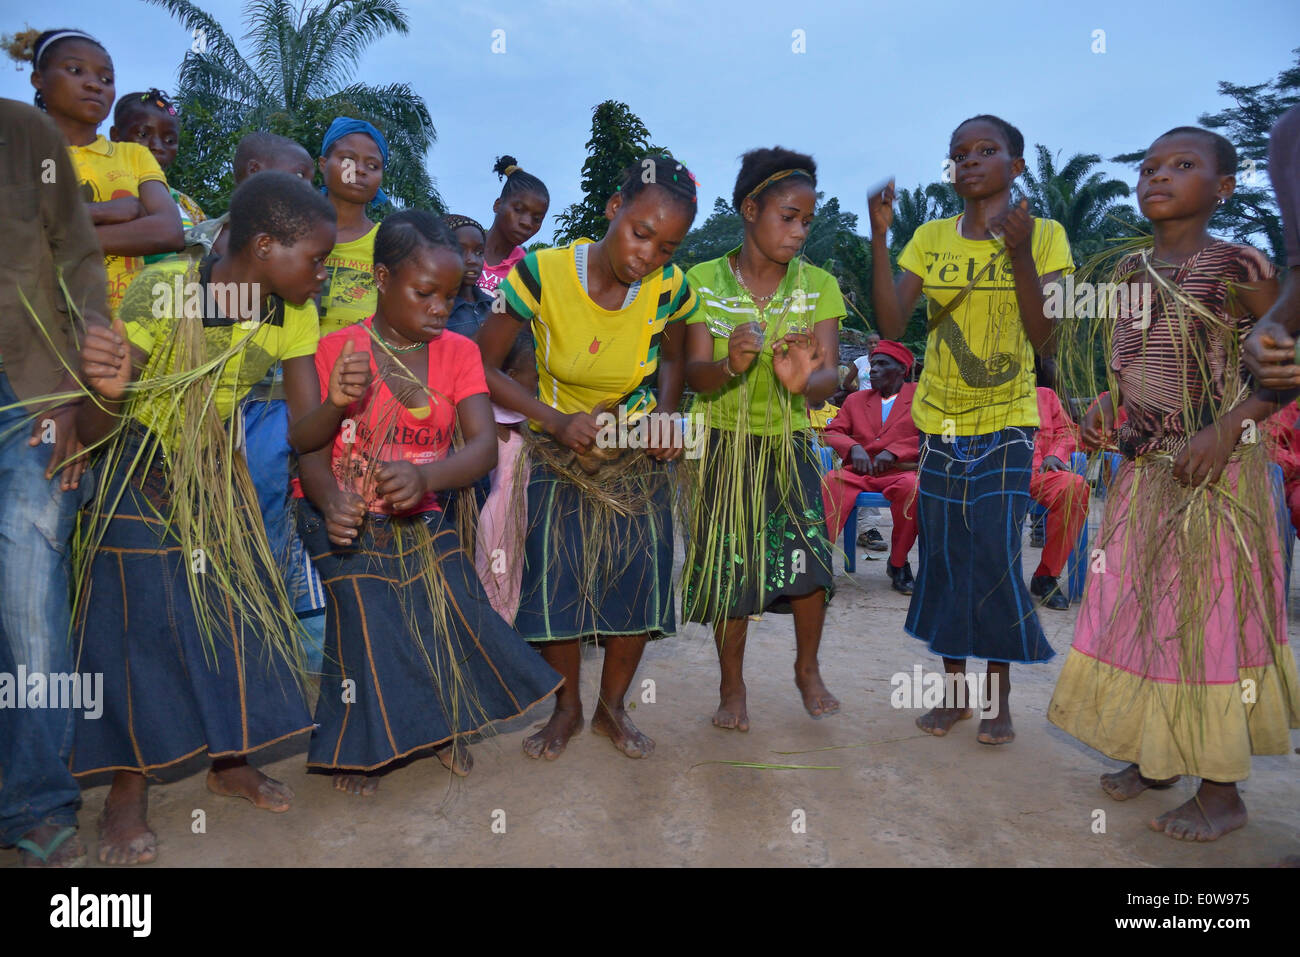 Dancing villagers at a village festival, Nkala, Bandundu Province, Democratic Republic of the Congo Stock Photo